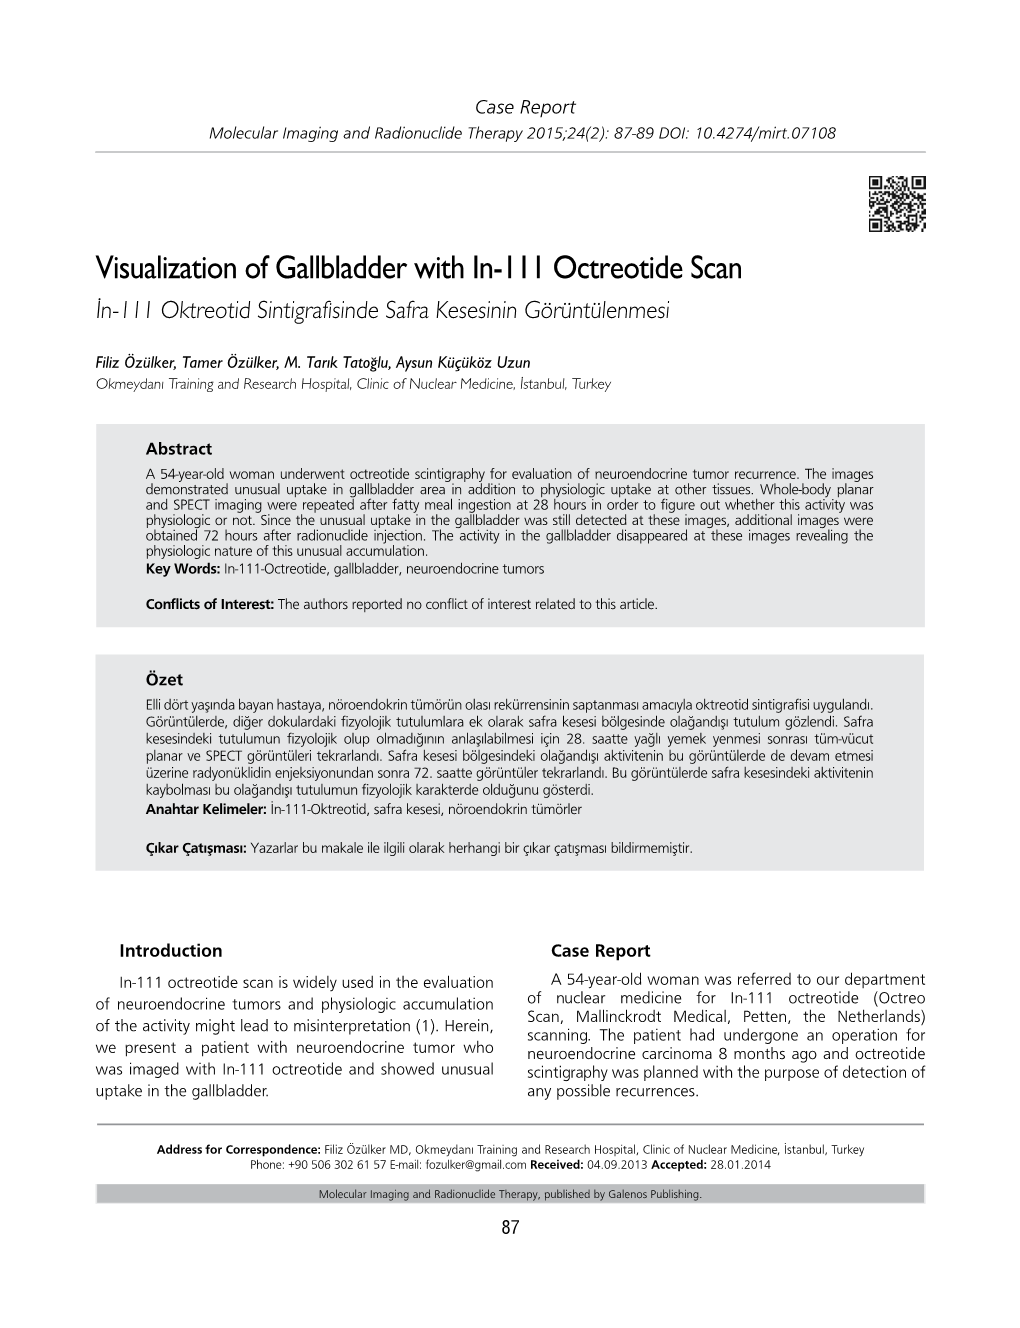 Visualization of Gallbladder with In-111 Octreotide Scan İn-111 Oktreotid Sintigrafisinde Safra Kesesinin Görüntülenmesi